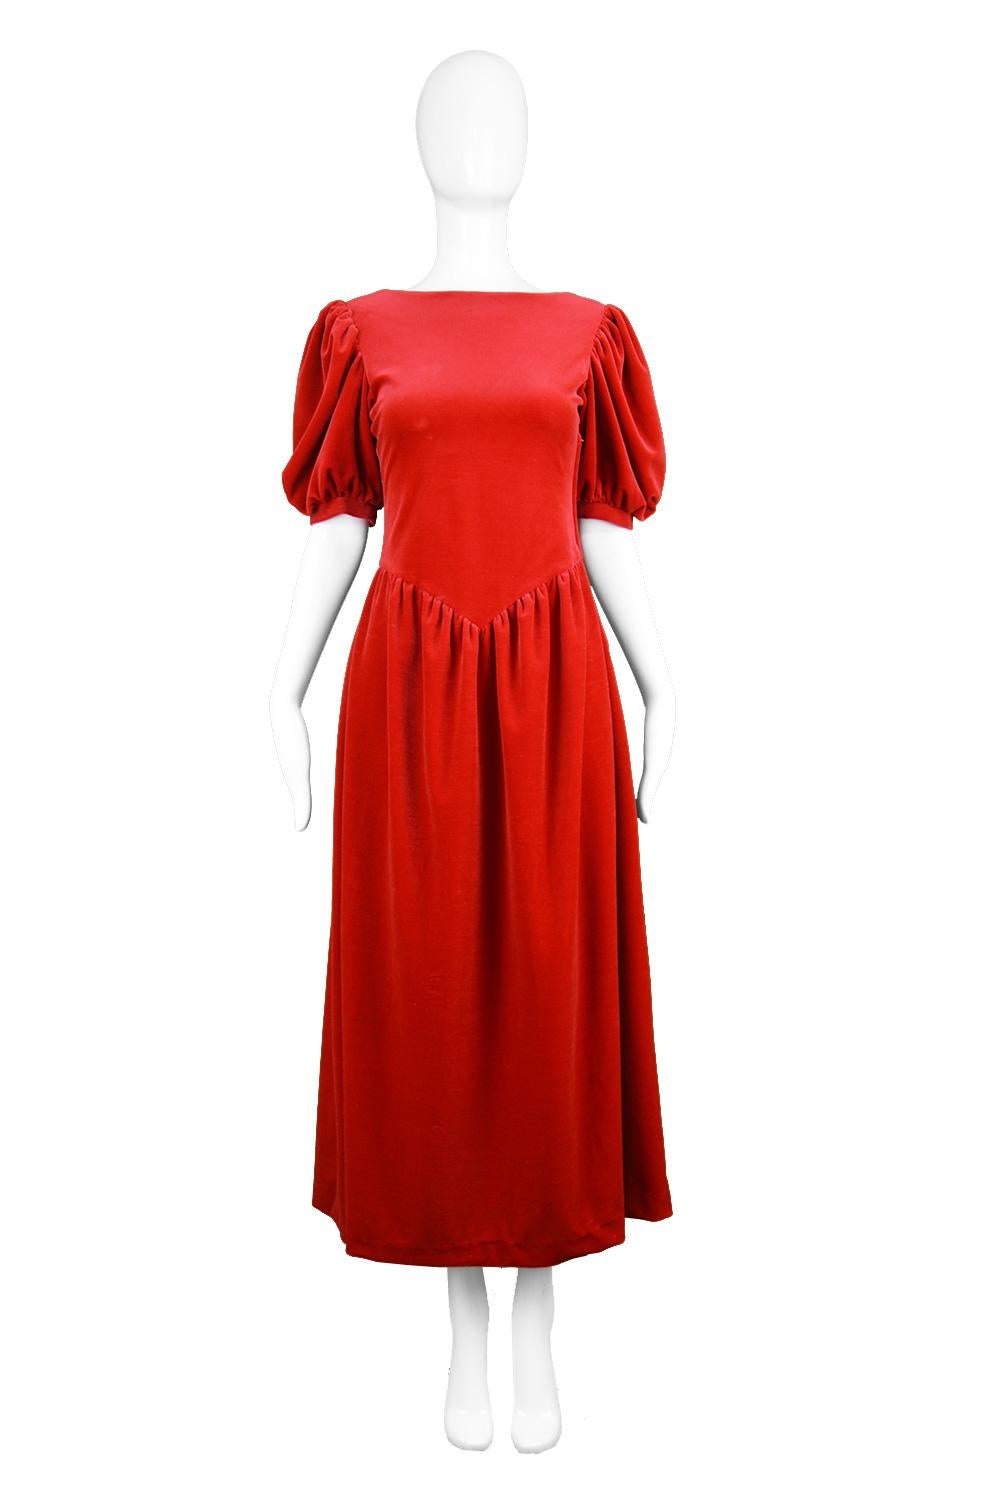 Vintage Scarlet Velvet Velour Deep Back Puff Sleeve Evening Dress, 1970s

Estimated Size: UK 8/ US 4/ EU 36. Please check measurements. 
Bust - Stretches from 32”-34